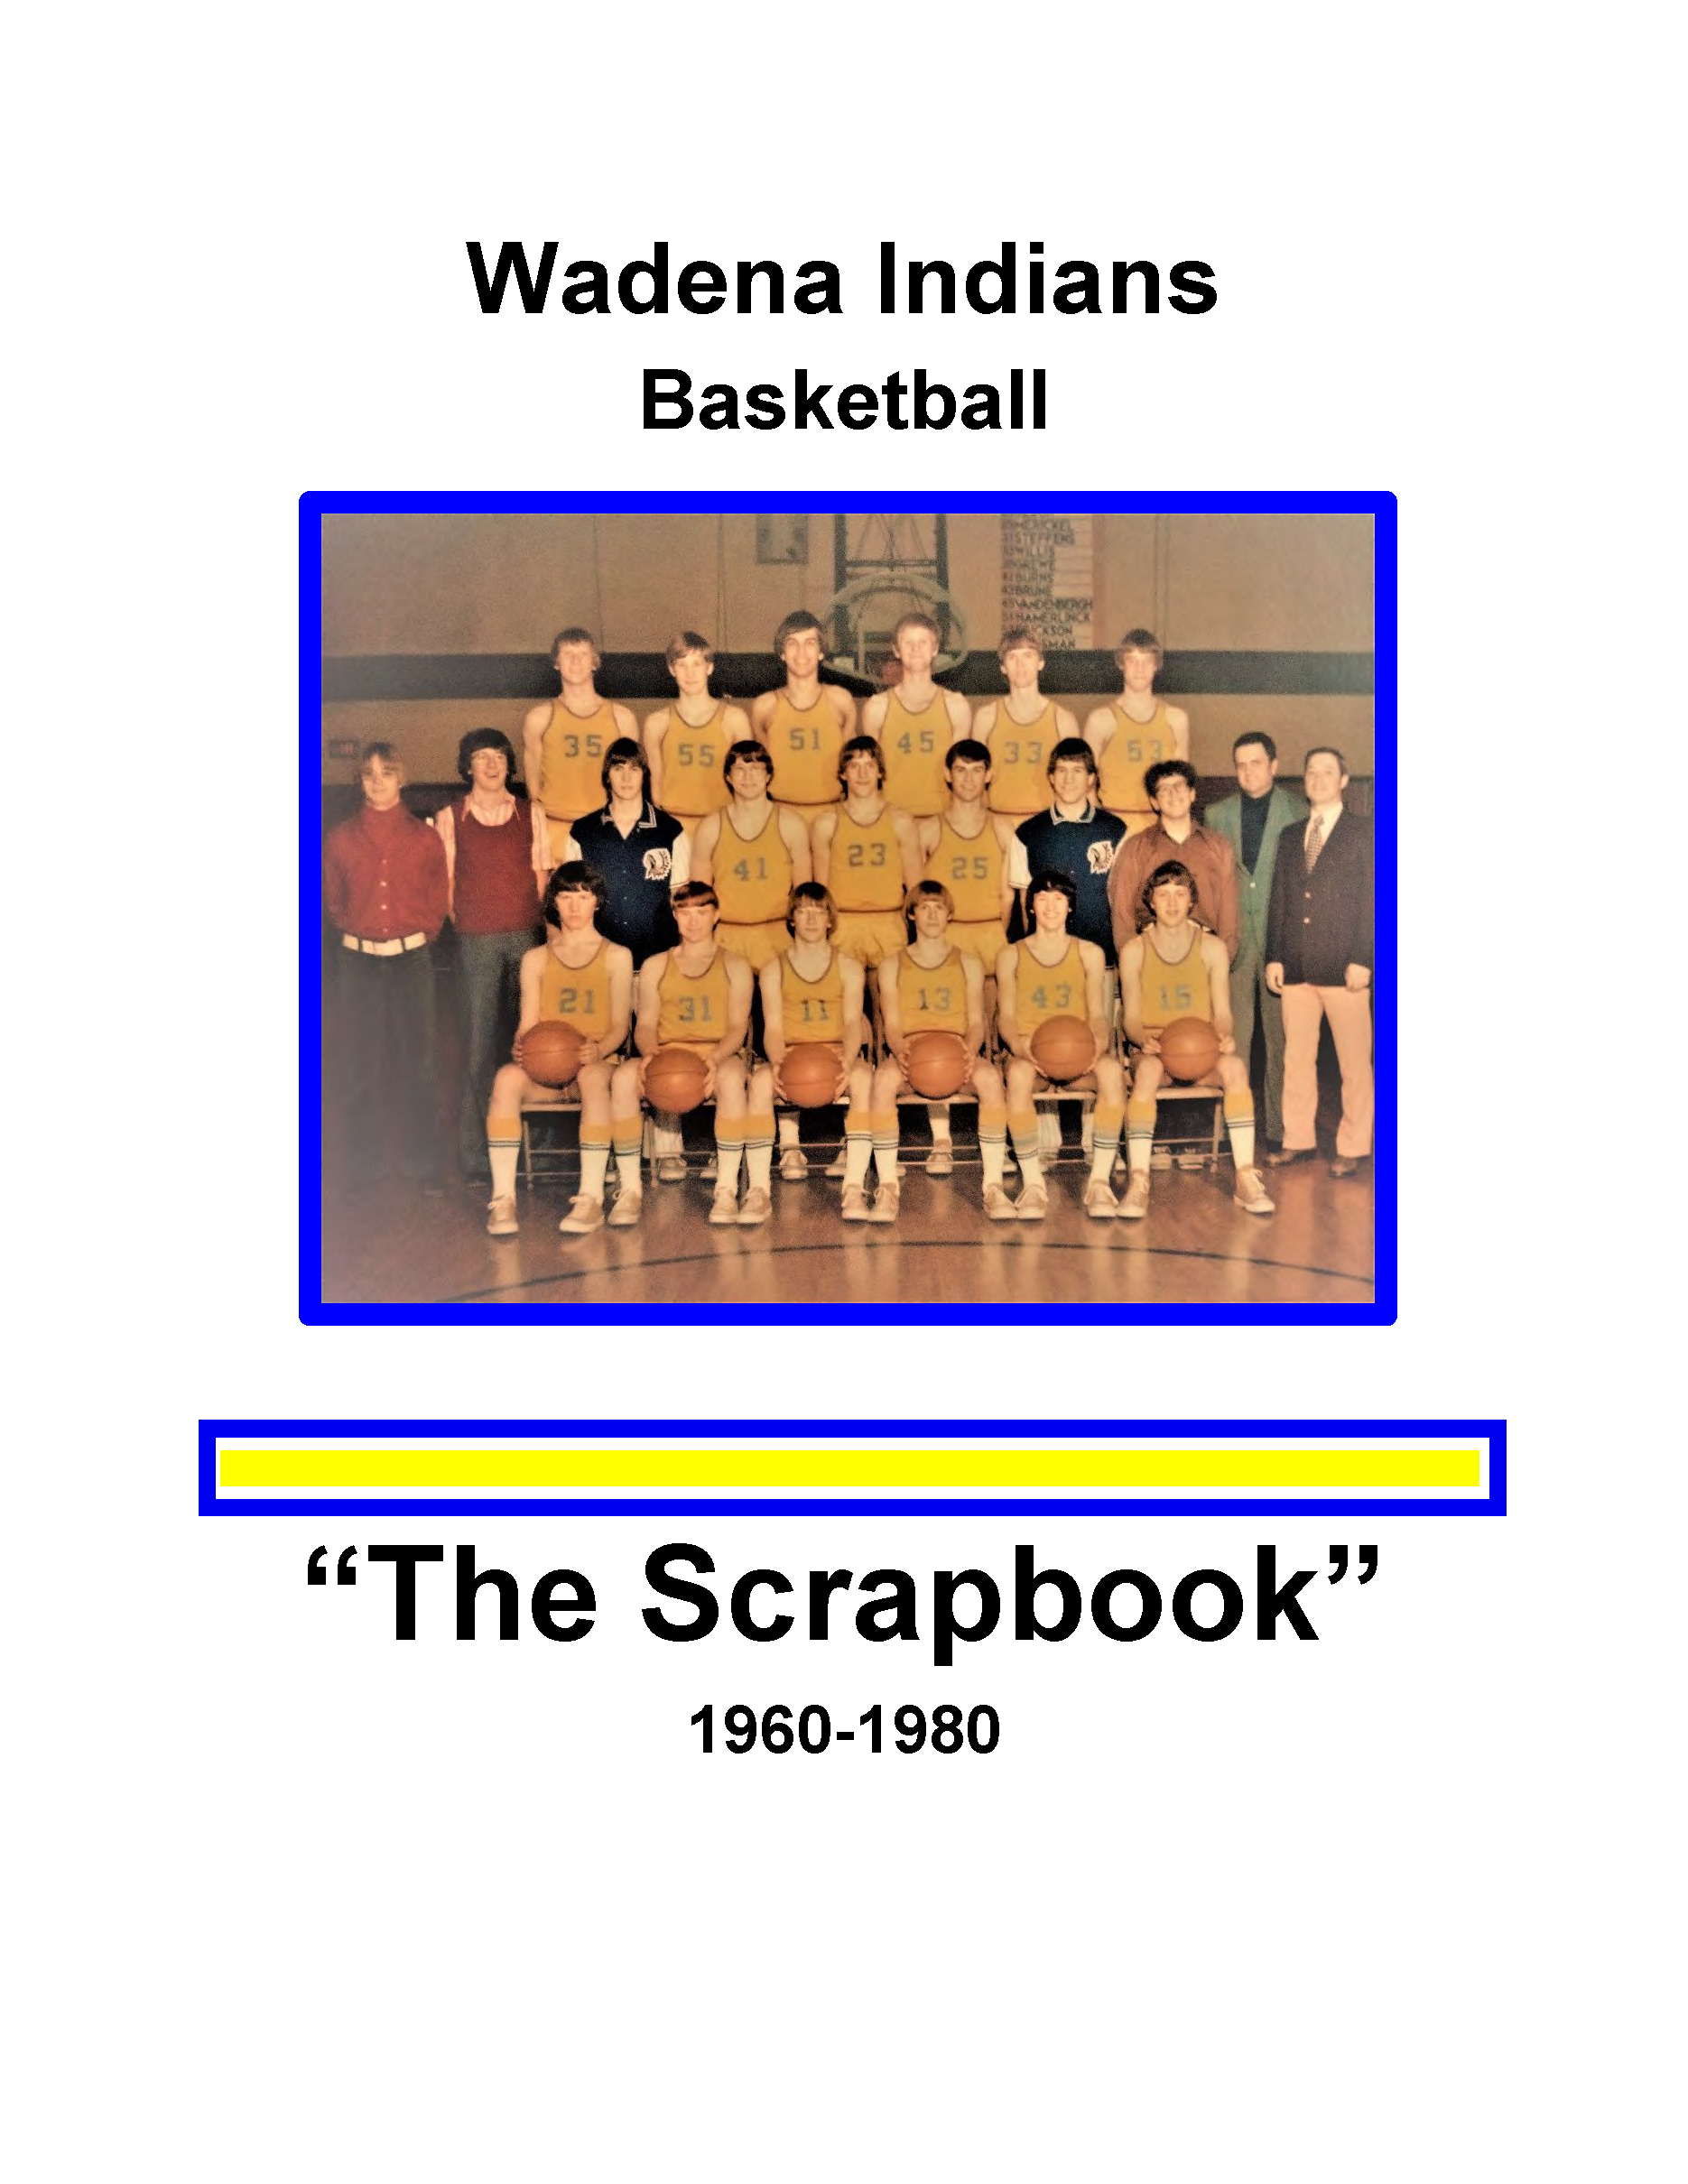 1960-1980 BB scrapbook